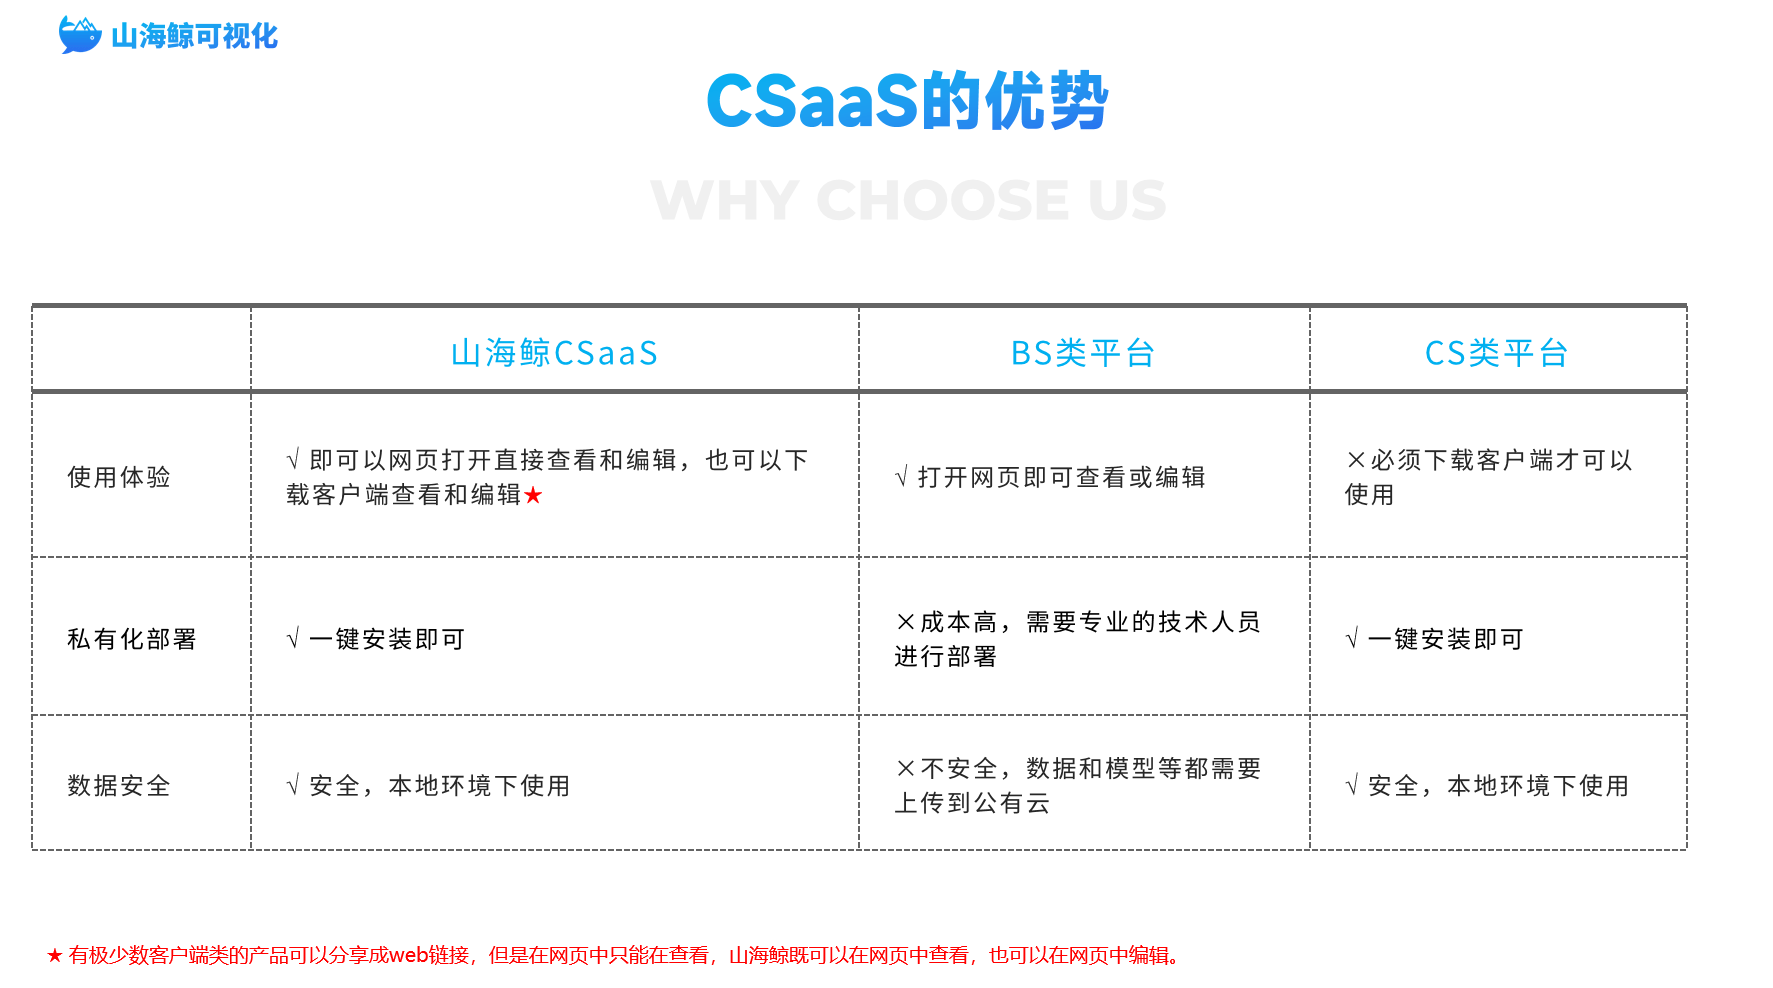 CSaaS架构：数字孪生软件架构的革命性突破